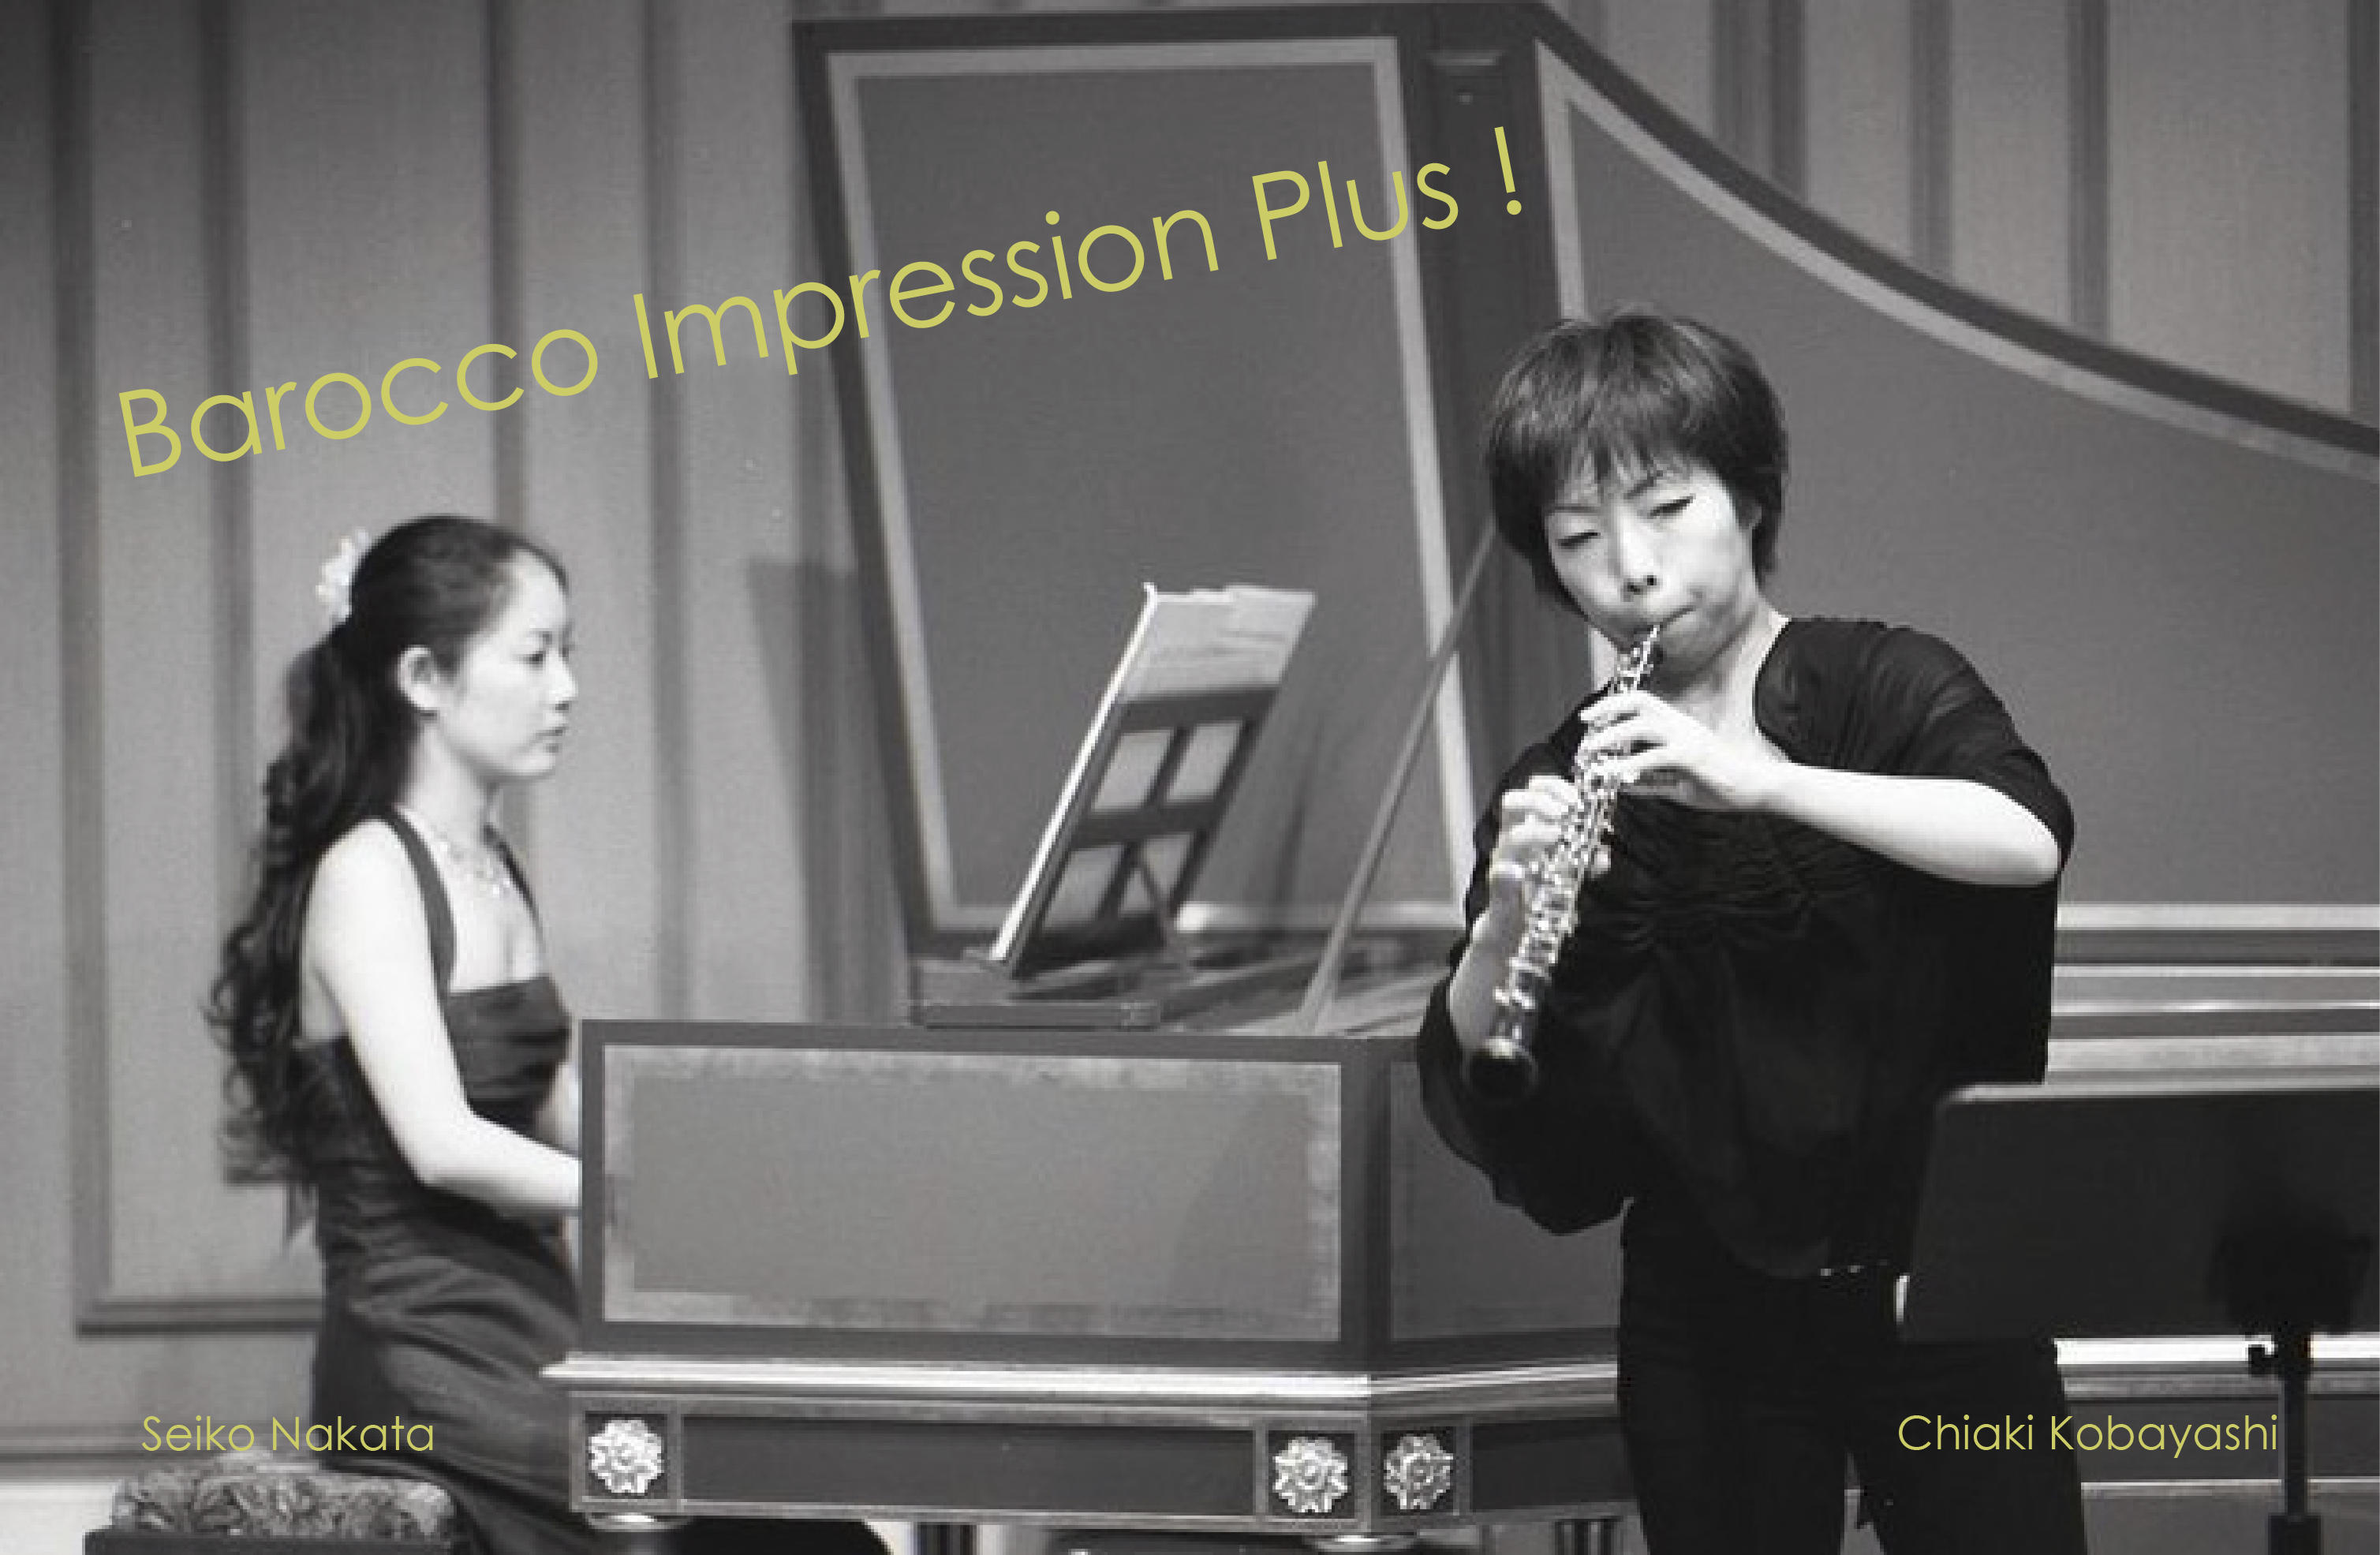 Barocco Impression Plus! : Concert Information